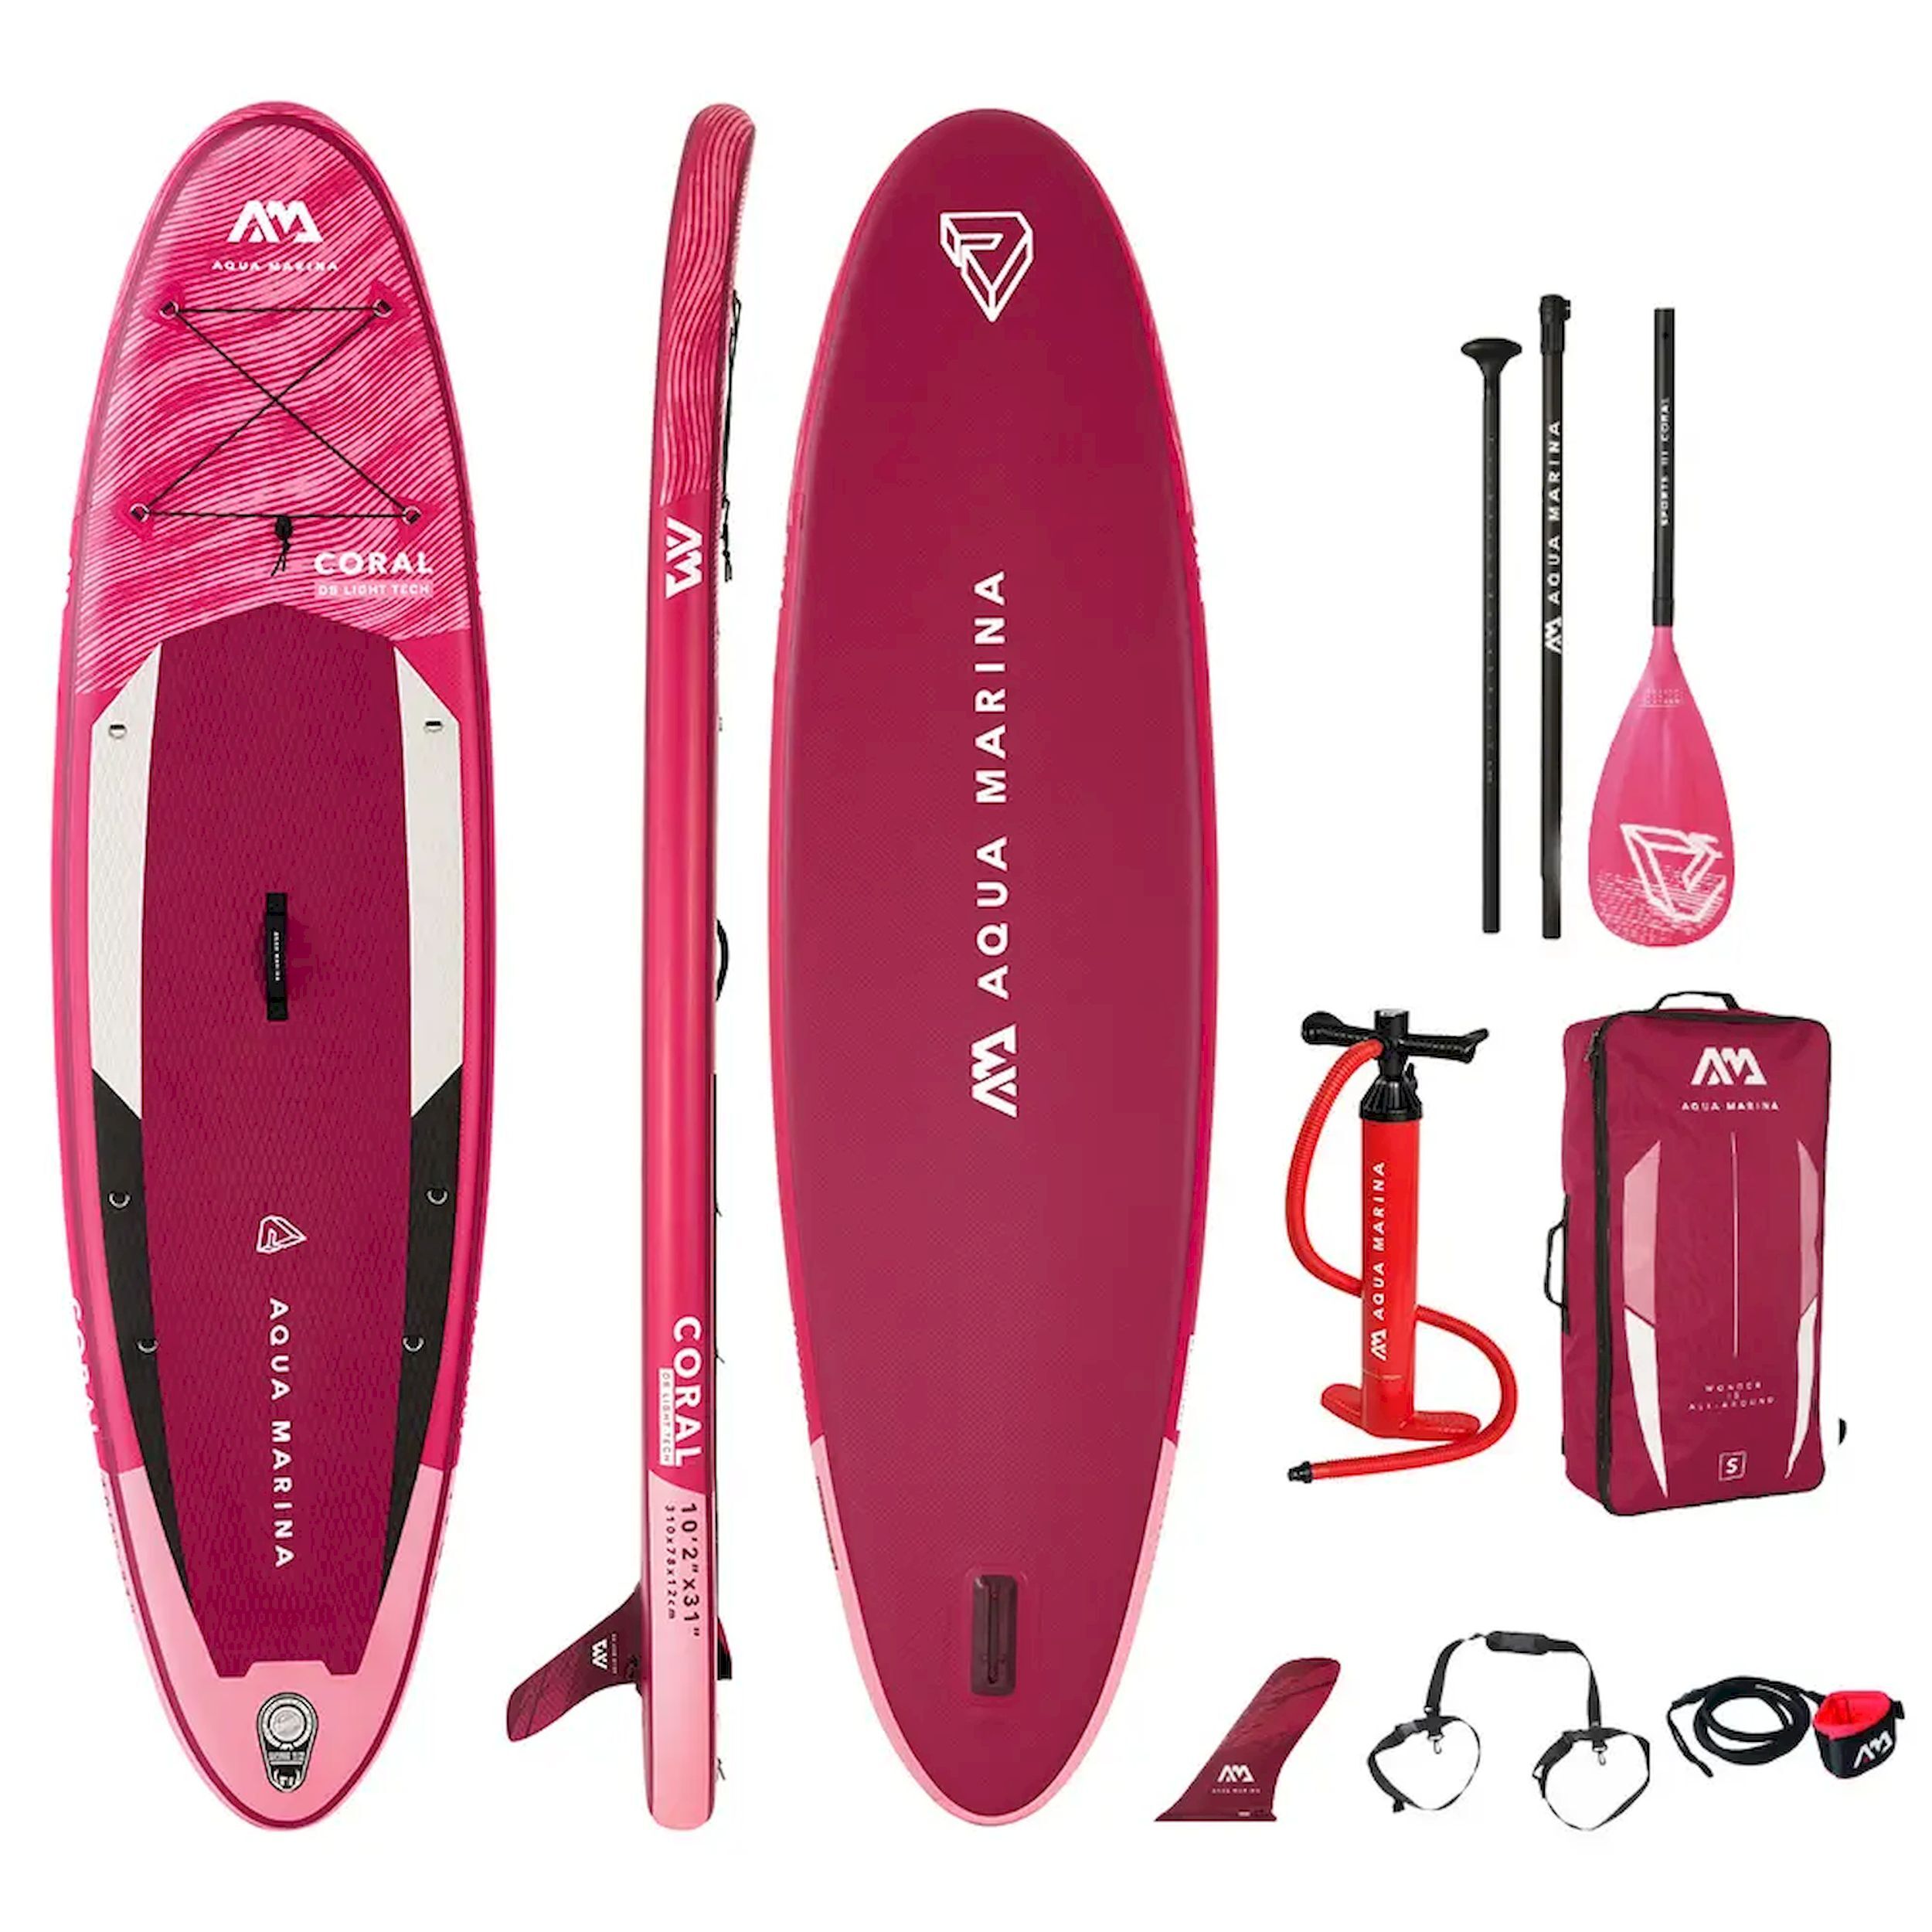 Aqua Marina Coral - Inflatable paddle board